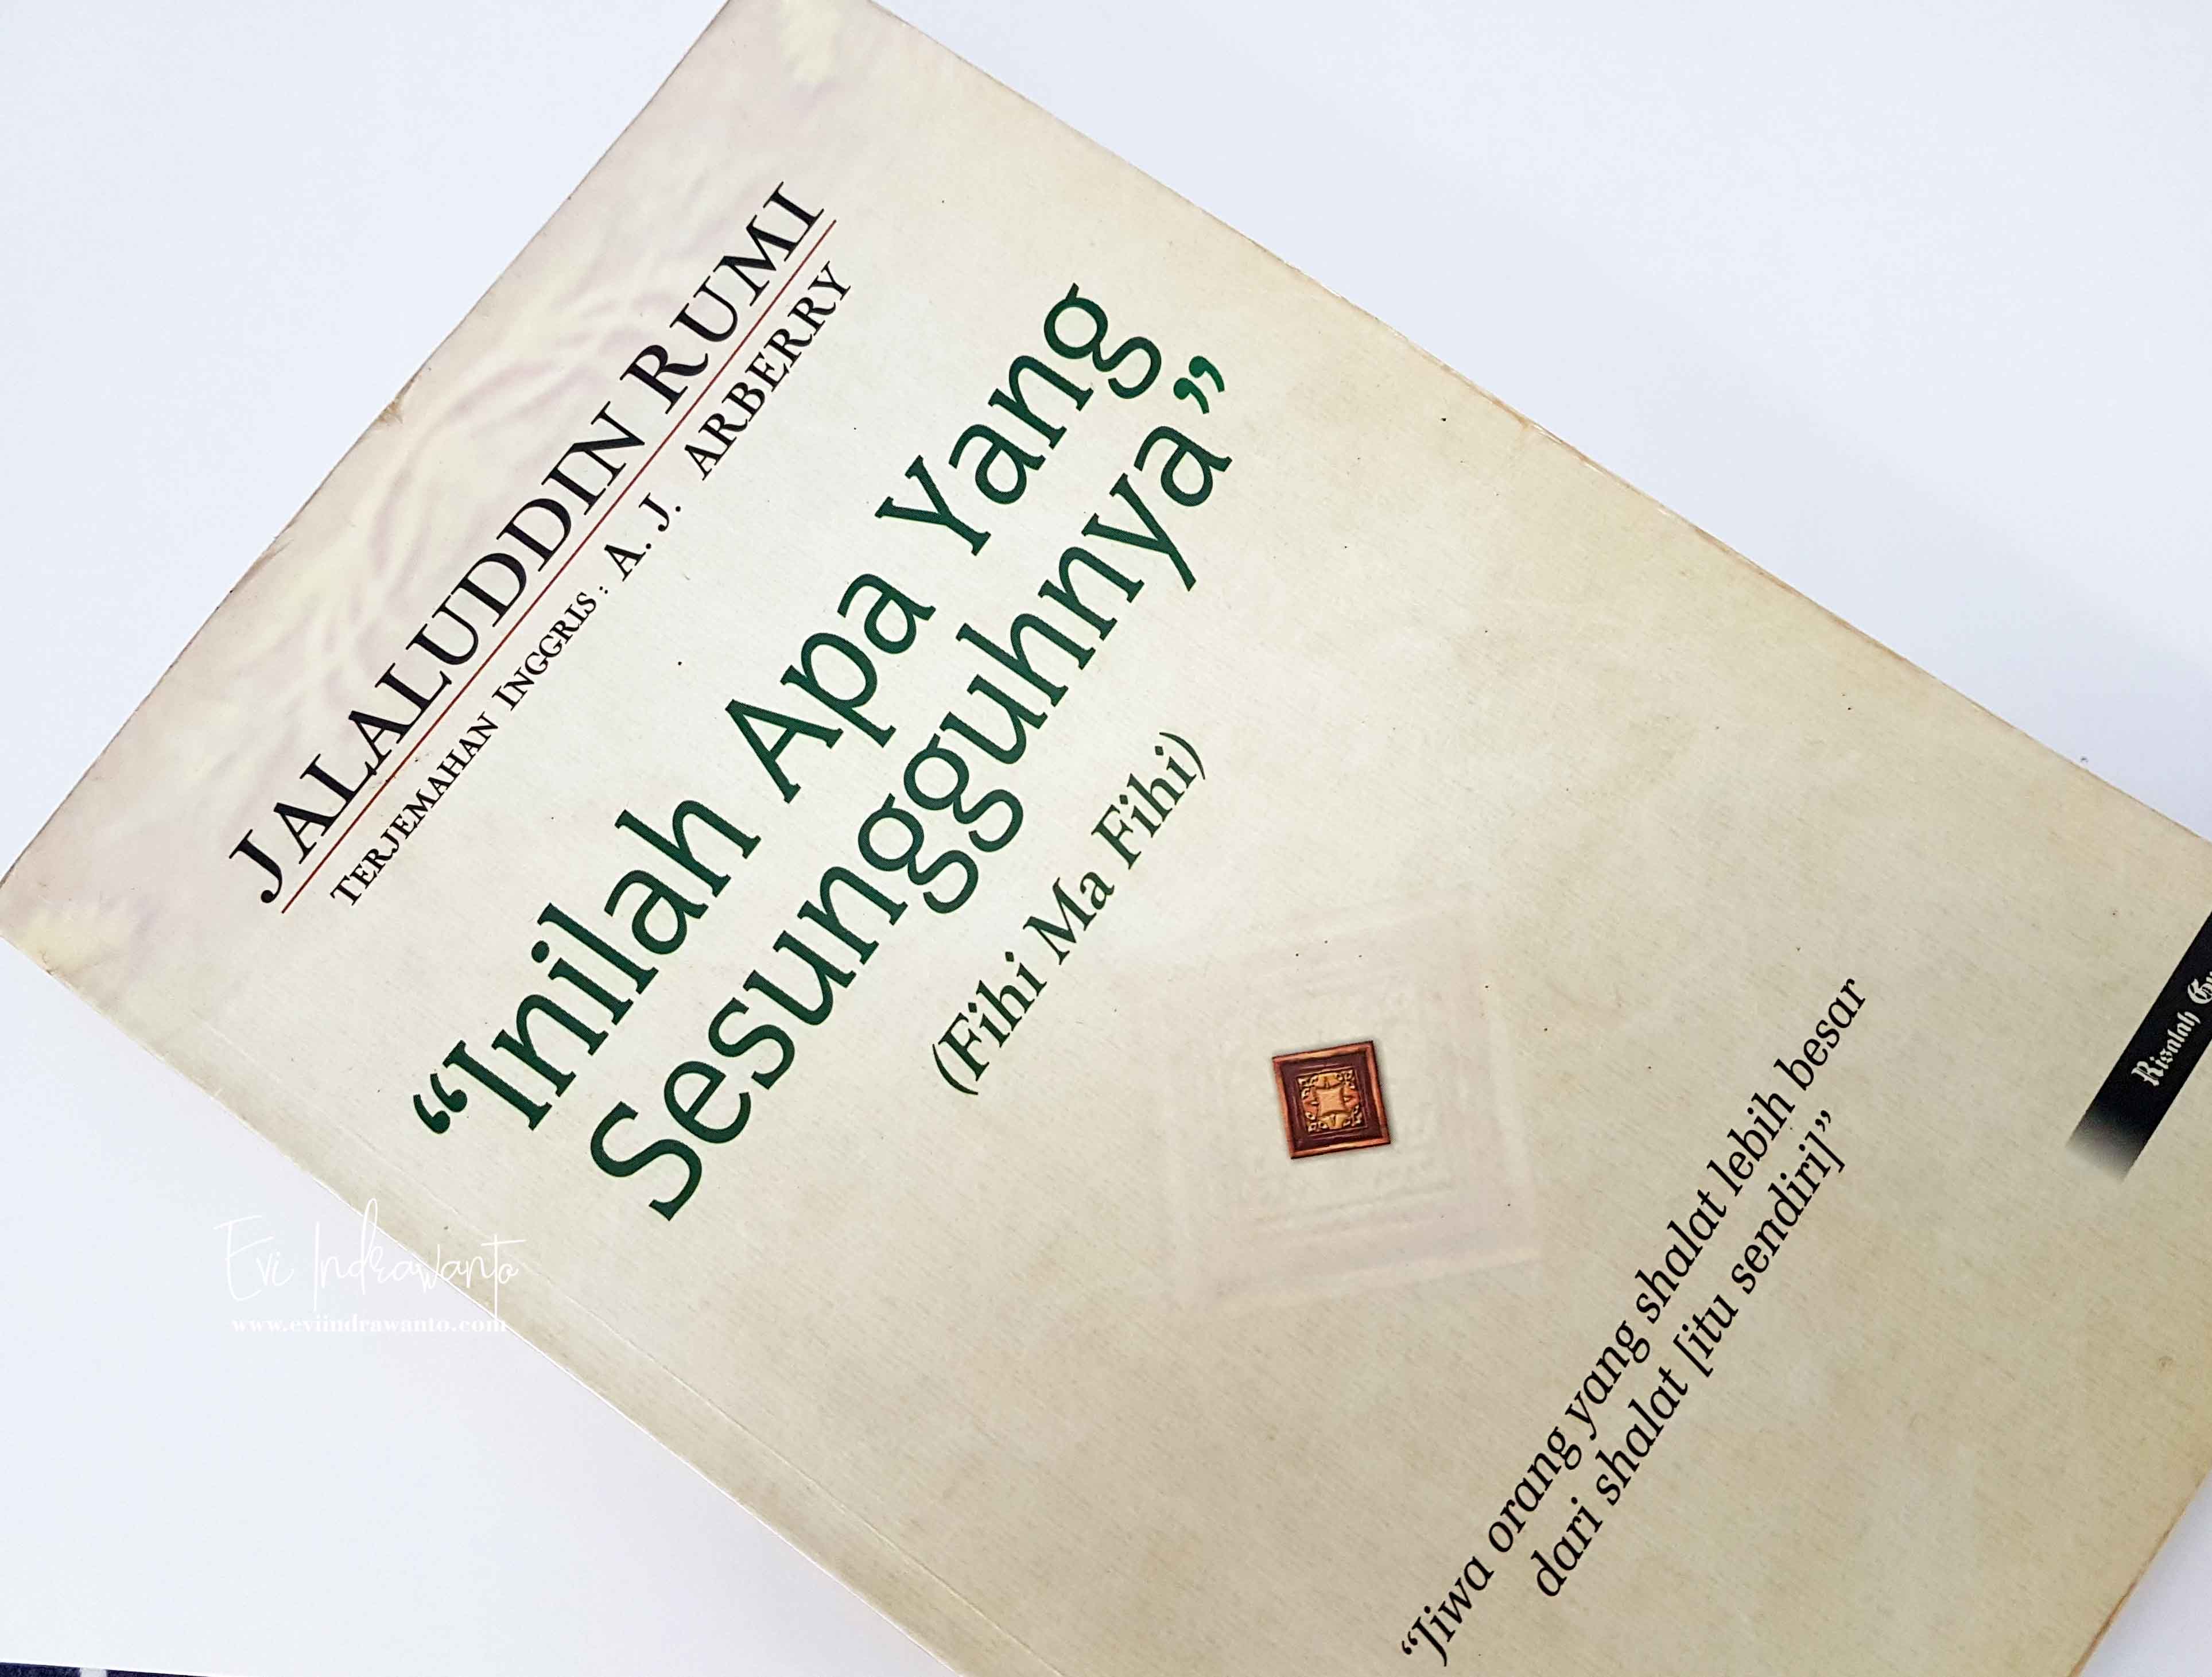 kumpulan buku jalaluddin rumi pdf